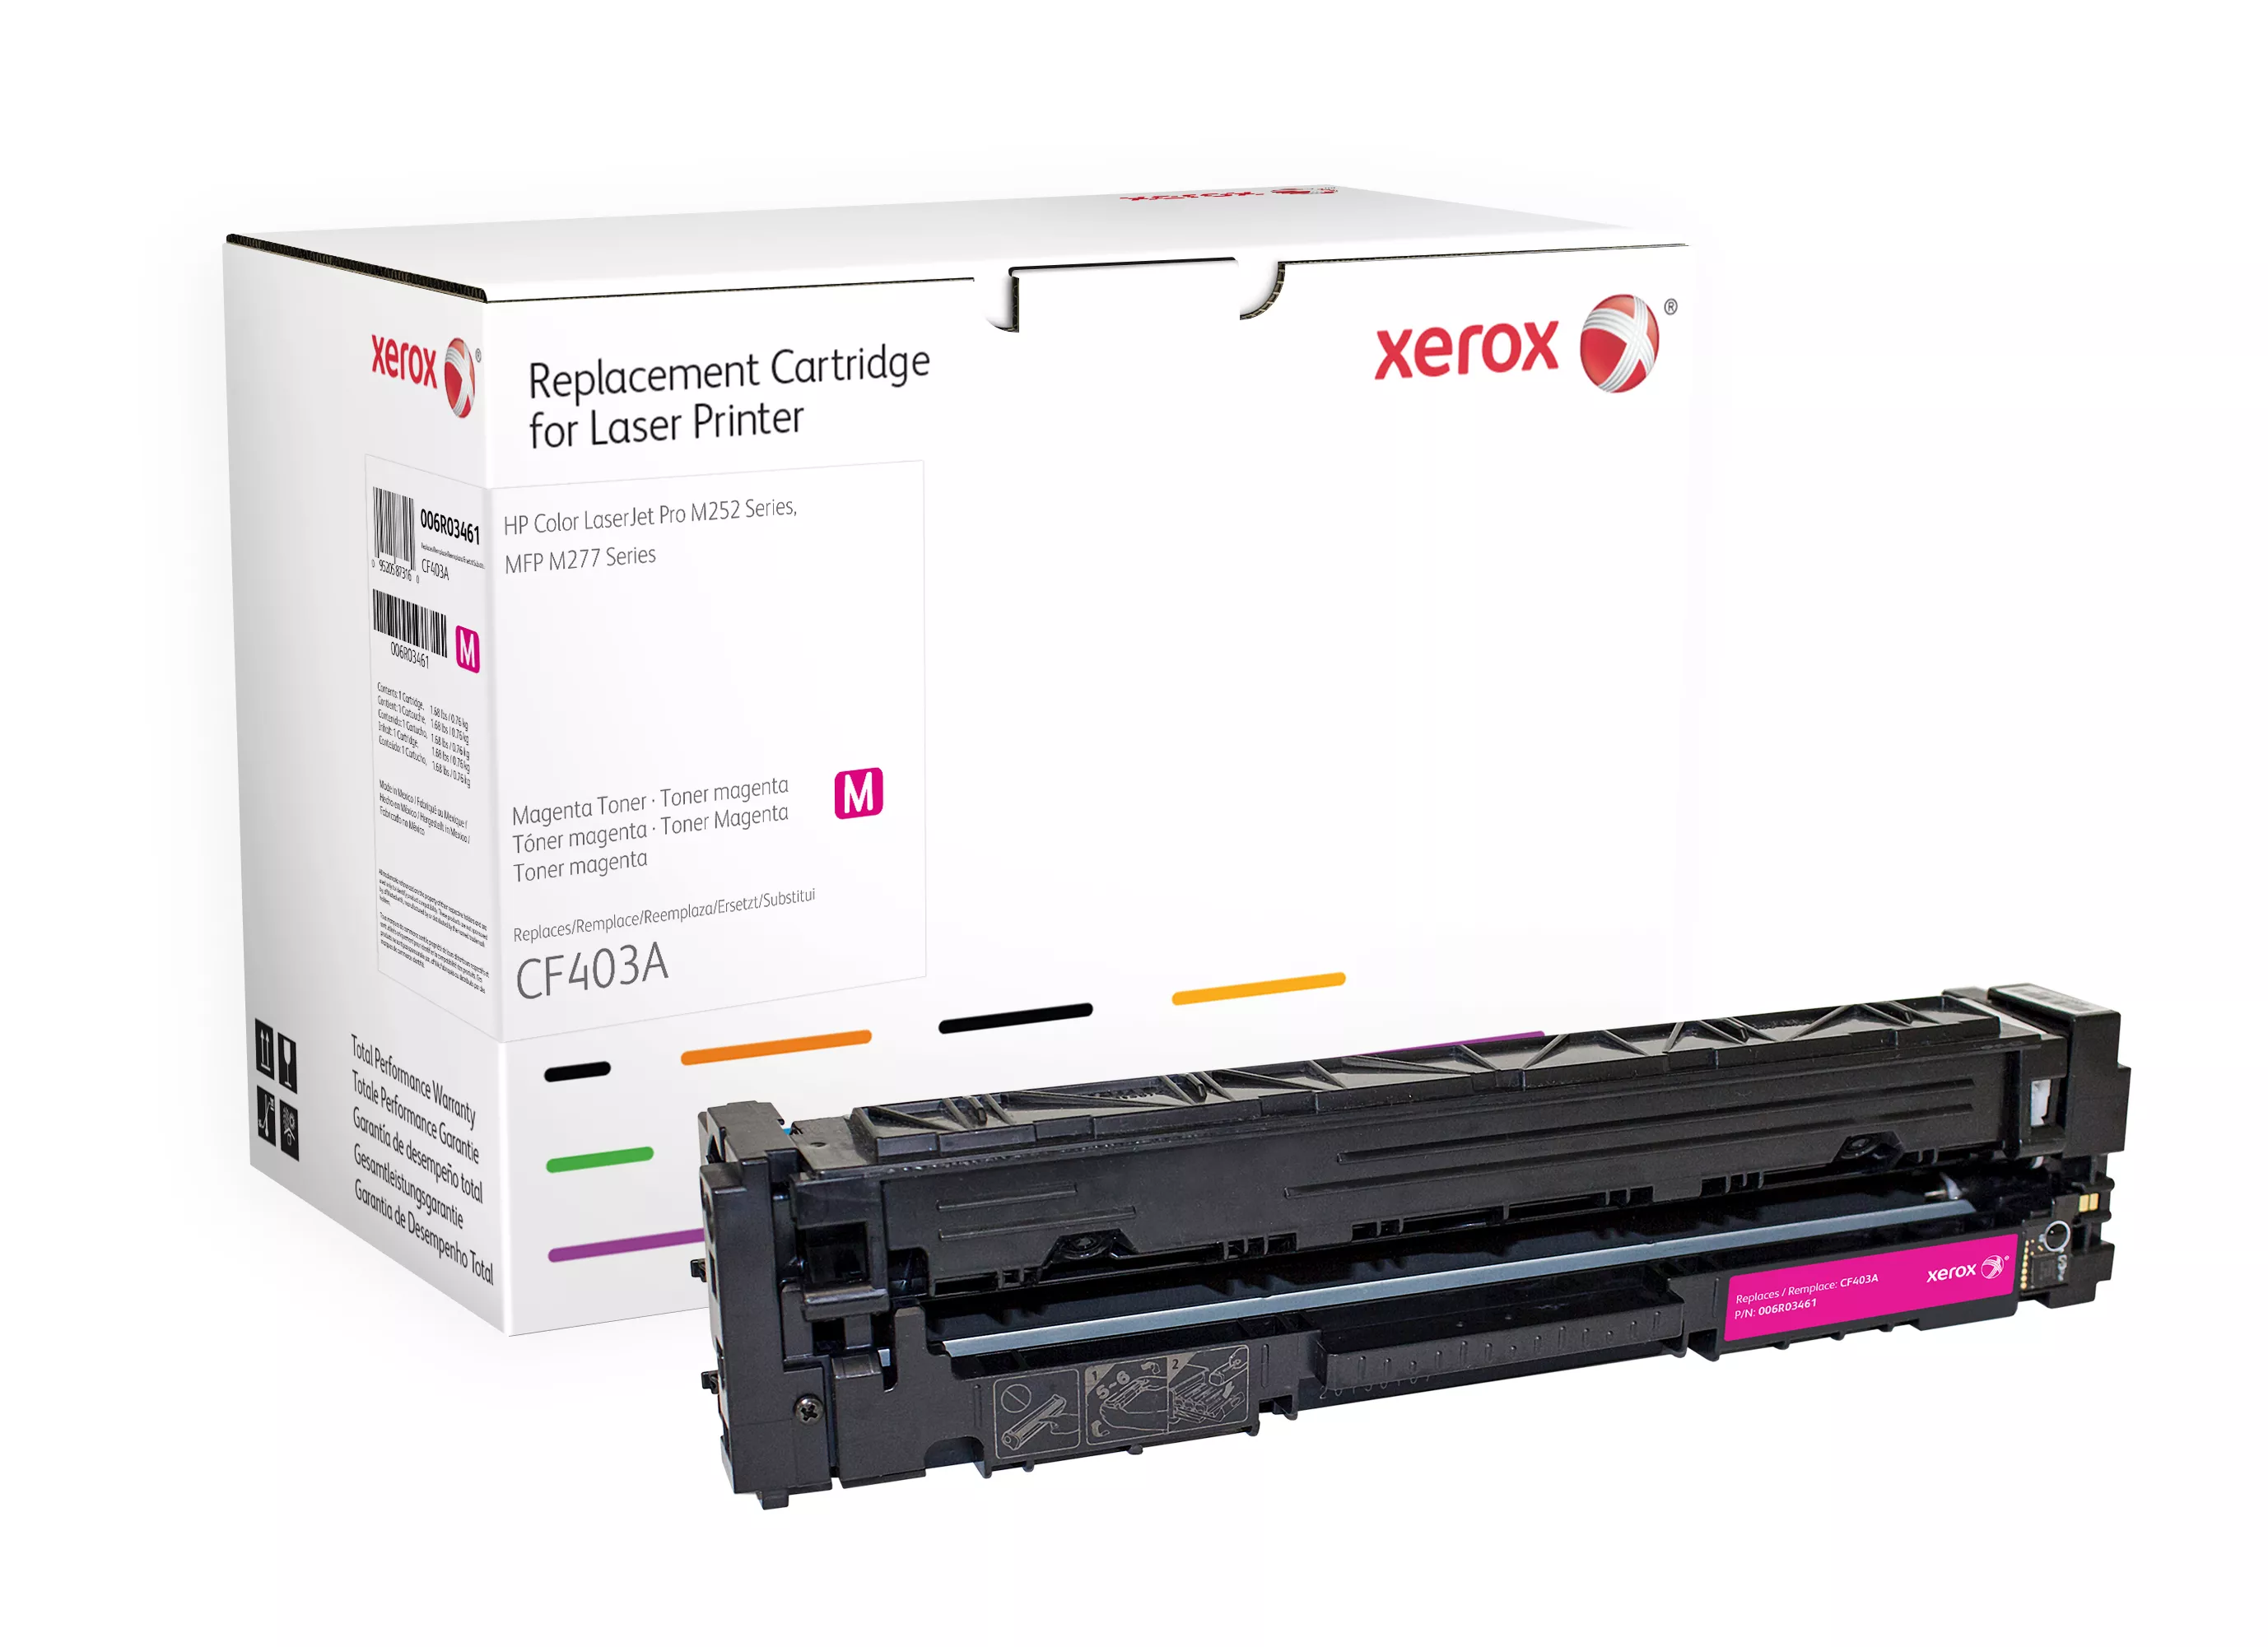 Achat XEROX XRC Toner CF403A magenta equivalent to HP 201A au meilleur prix